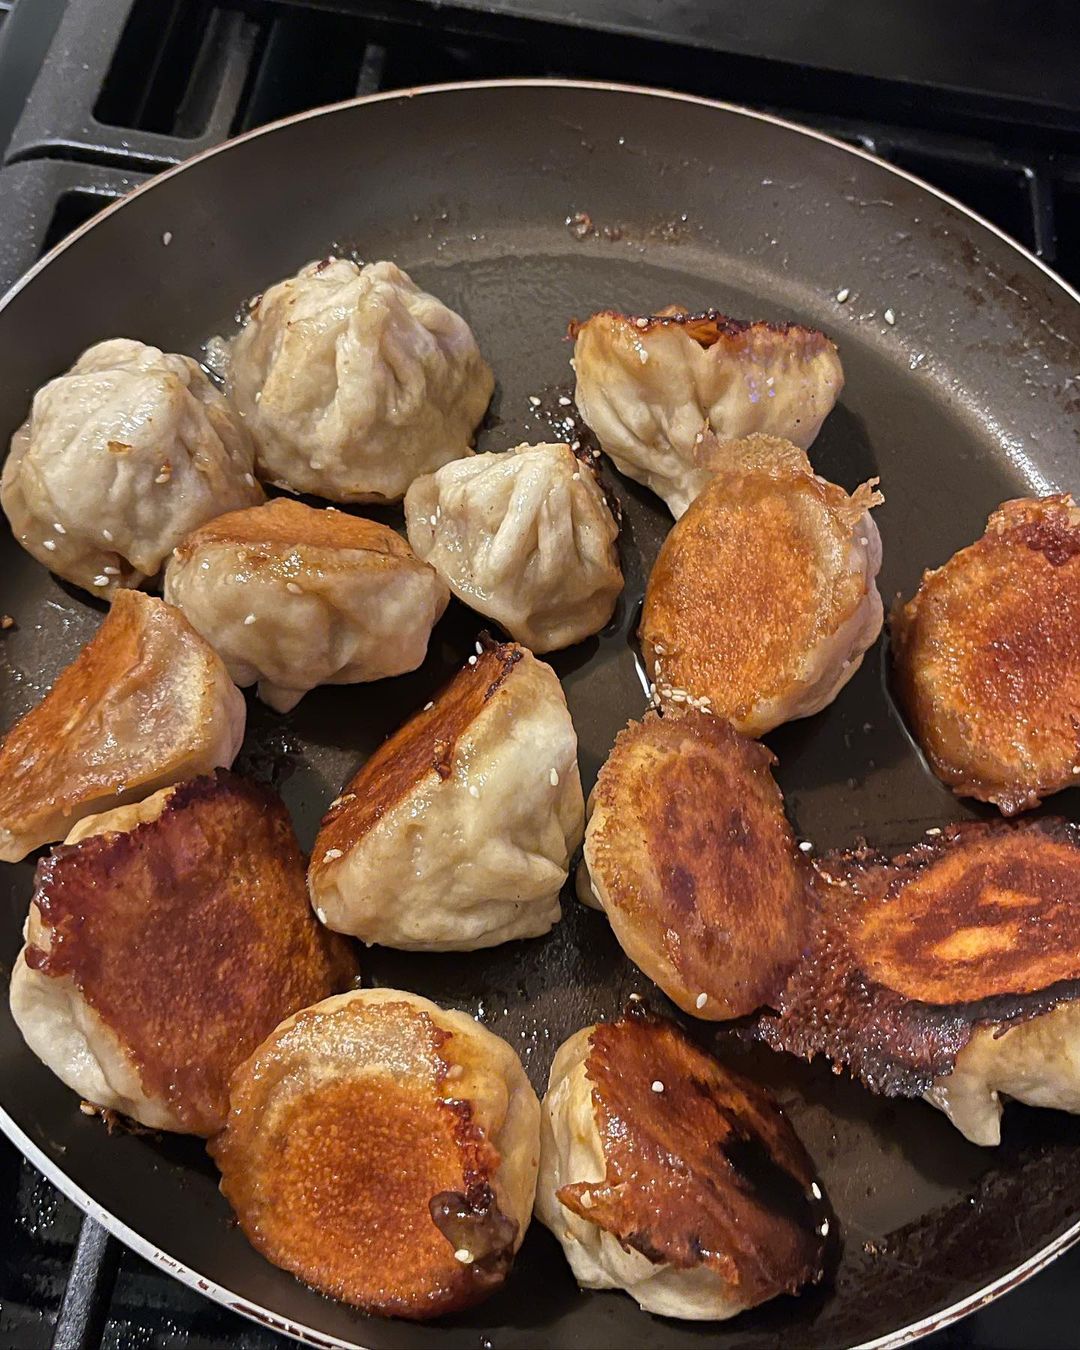 Pan Method to cook baozi